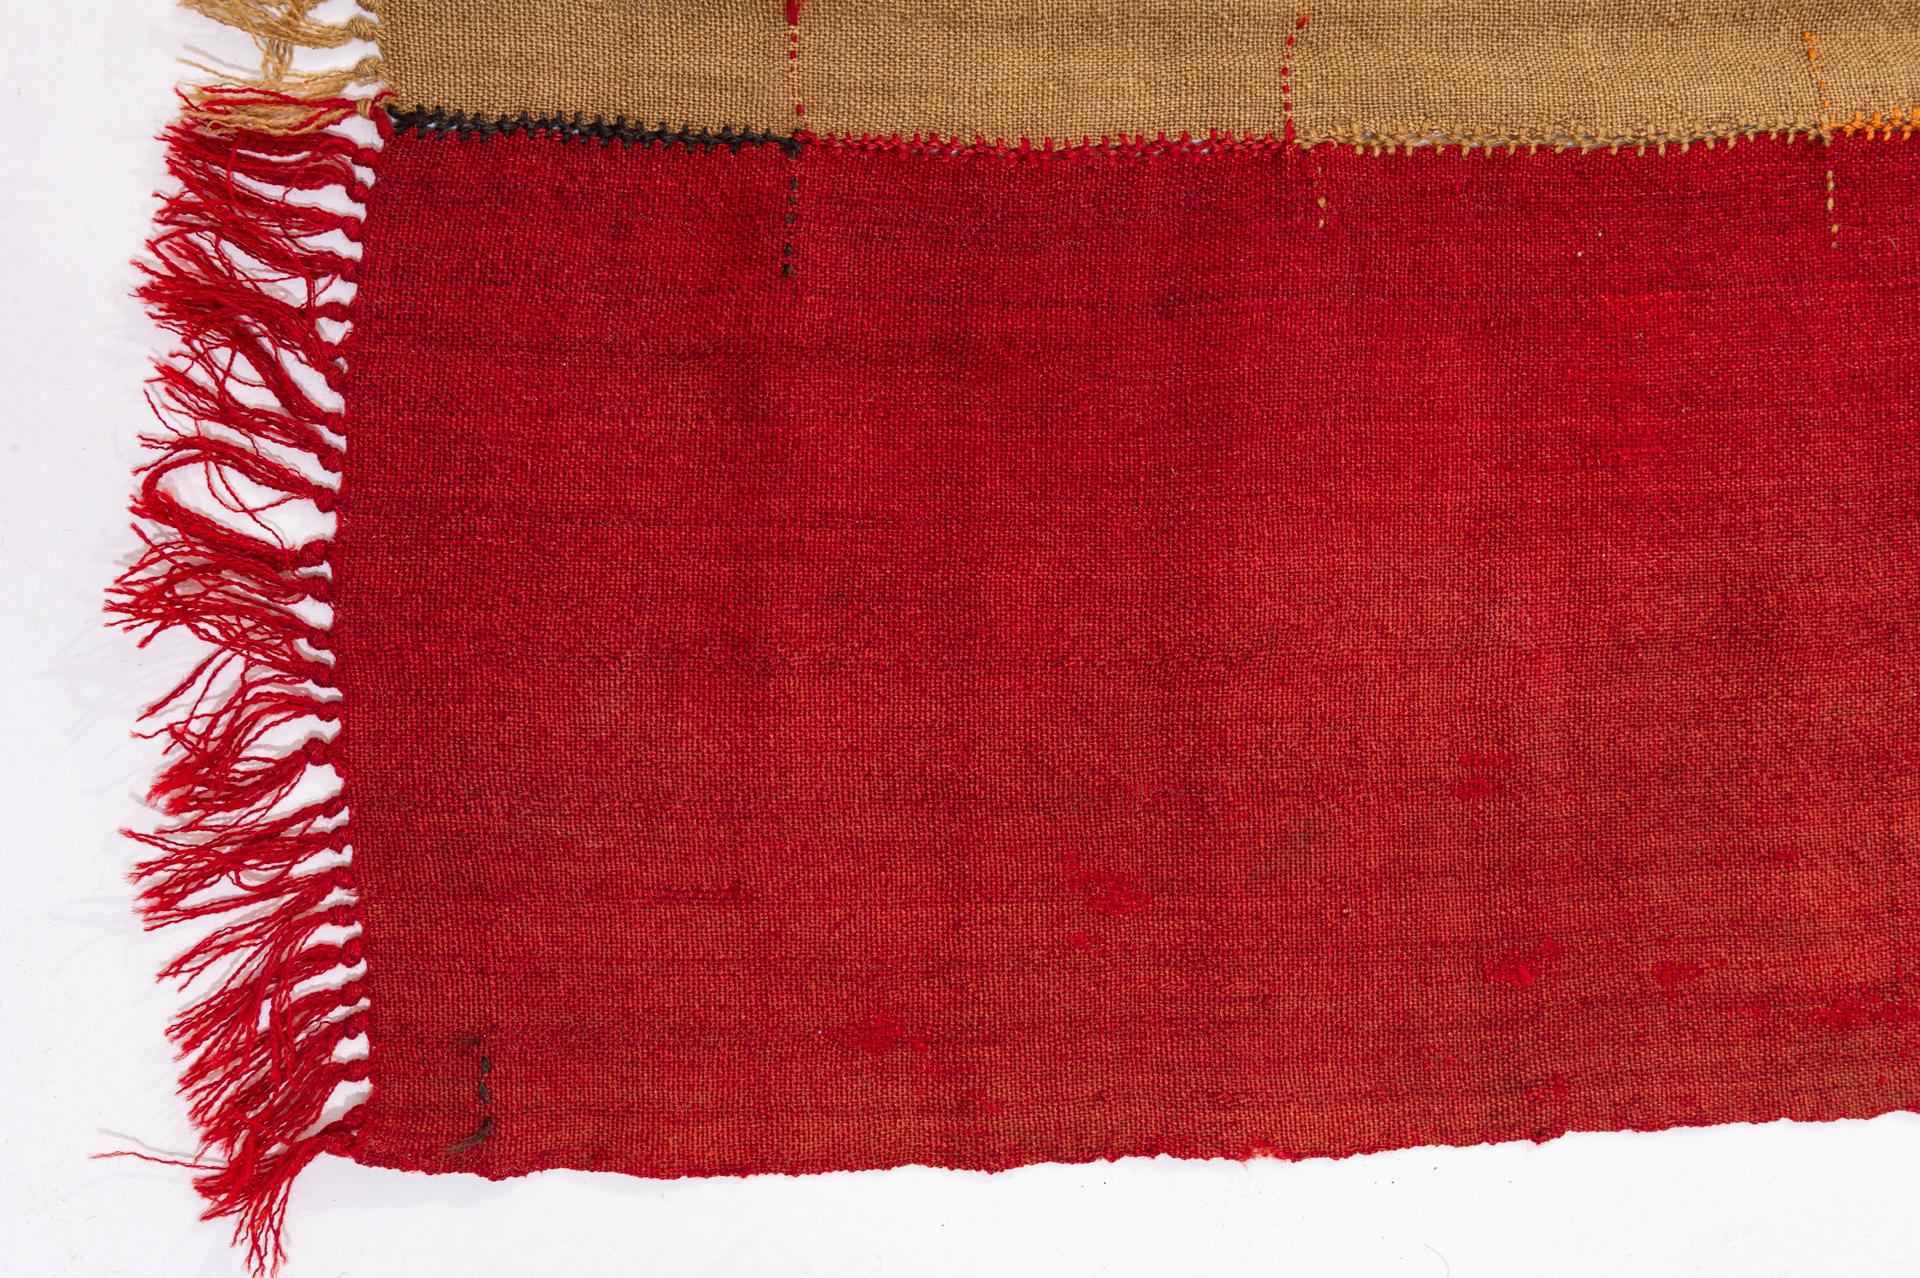 Hand-Woven Nomadic Oriental Cloth ot Carpet For Sale